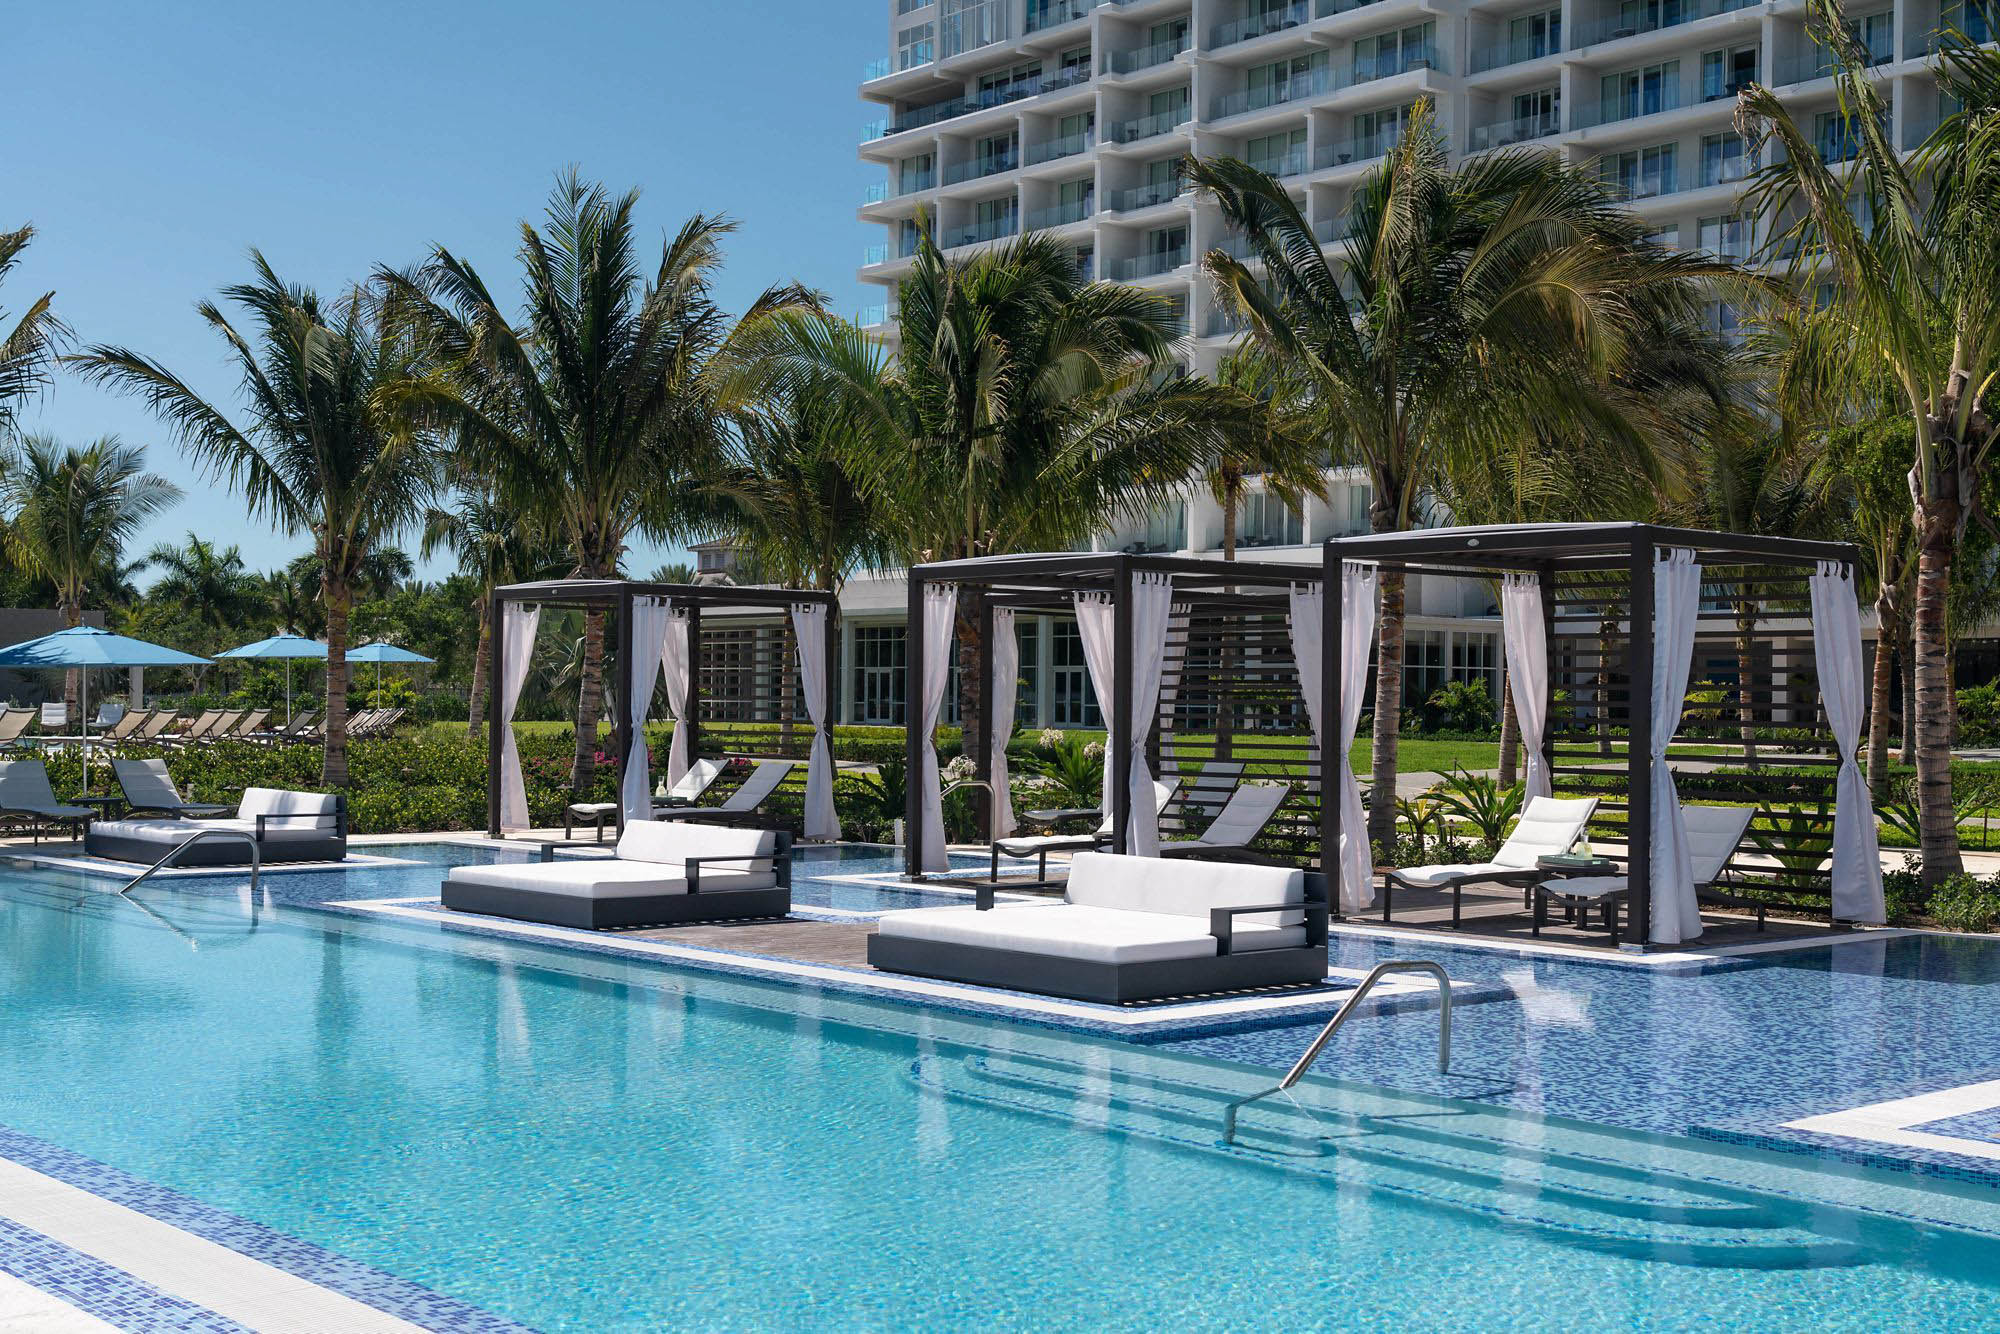 The Ritz-Carlton, Turks & Caicos Resort – Providenciales, Turks and Caicos Islands – Pool Cabanas